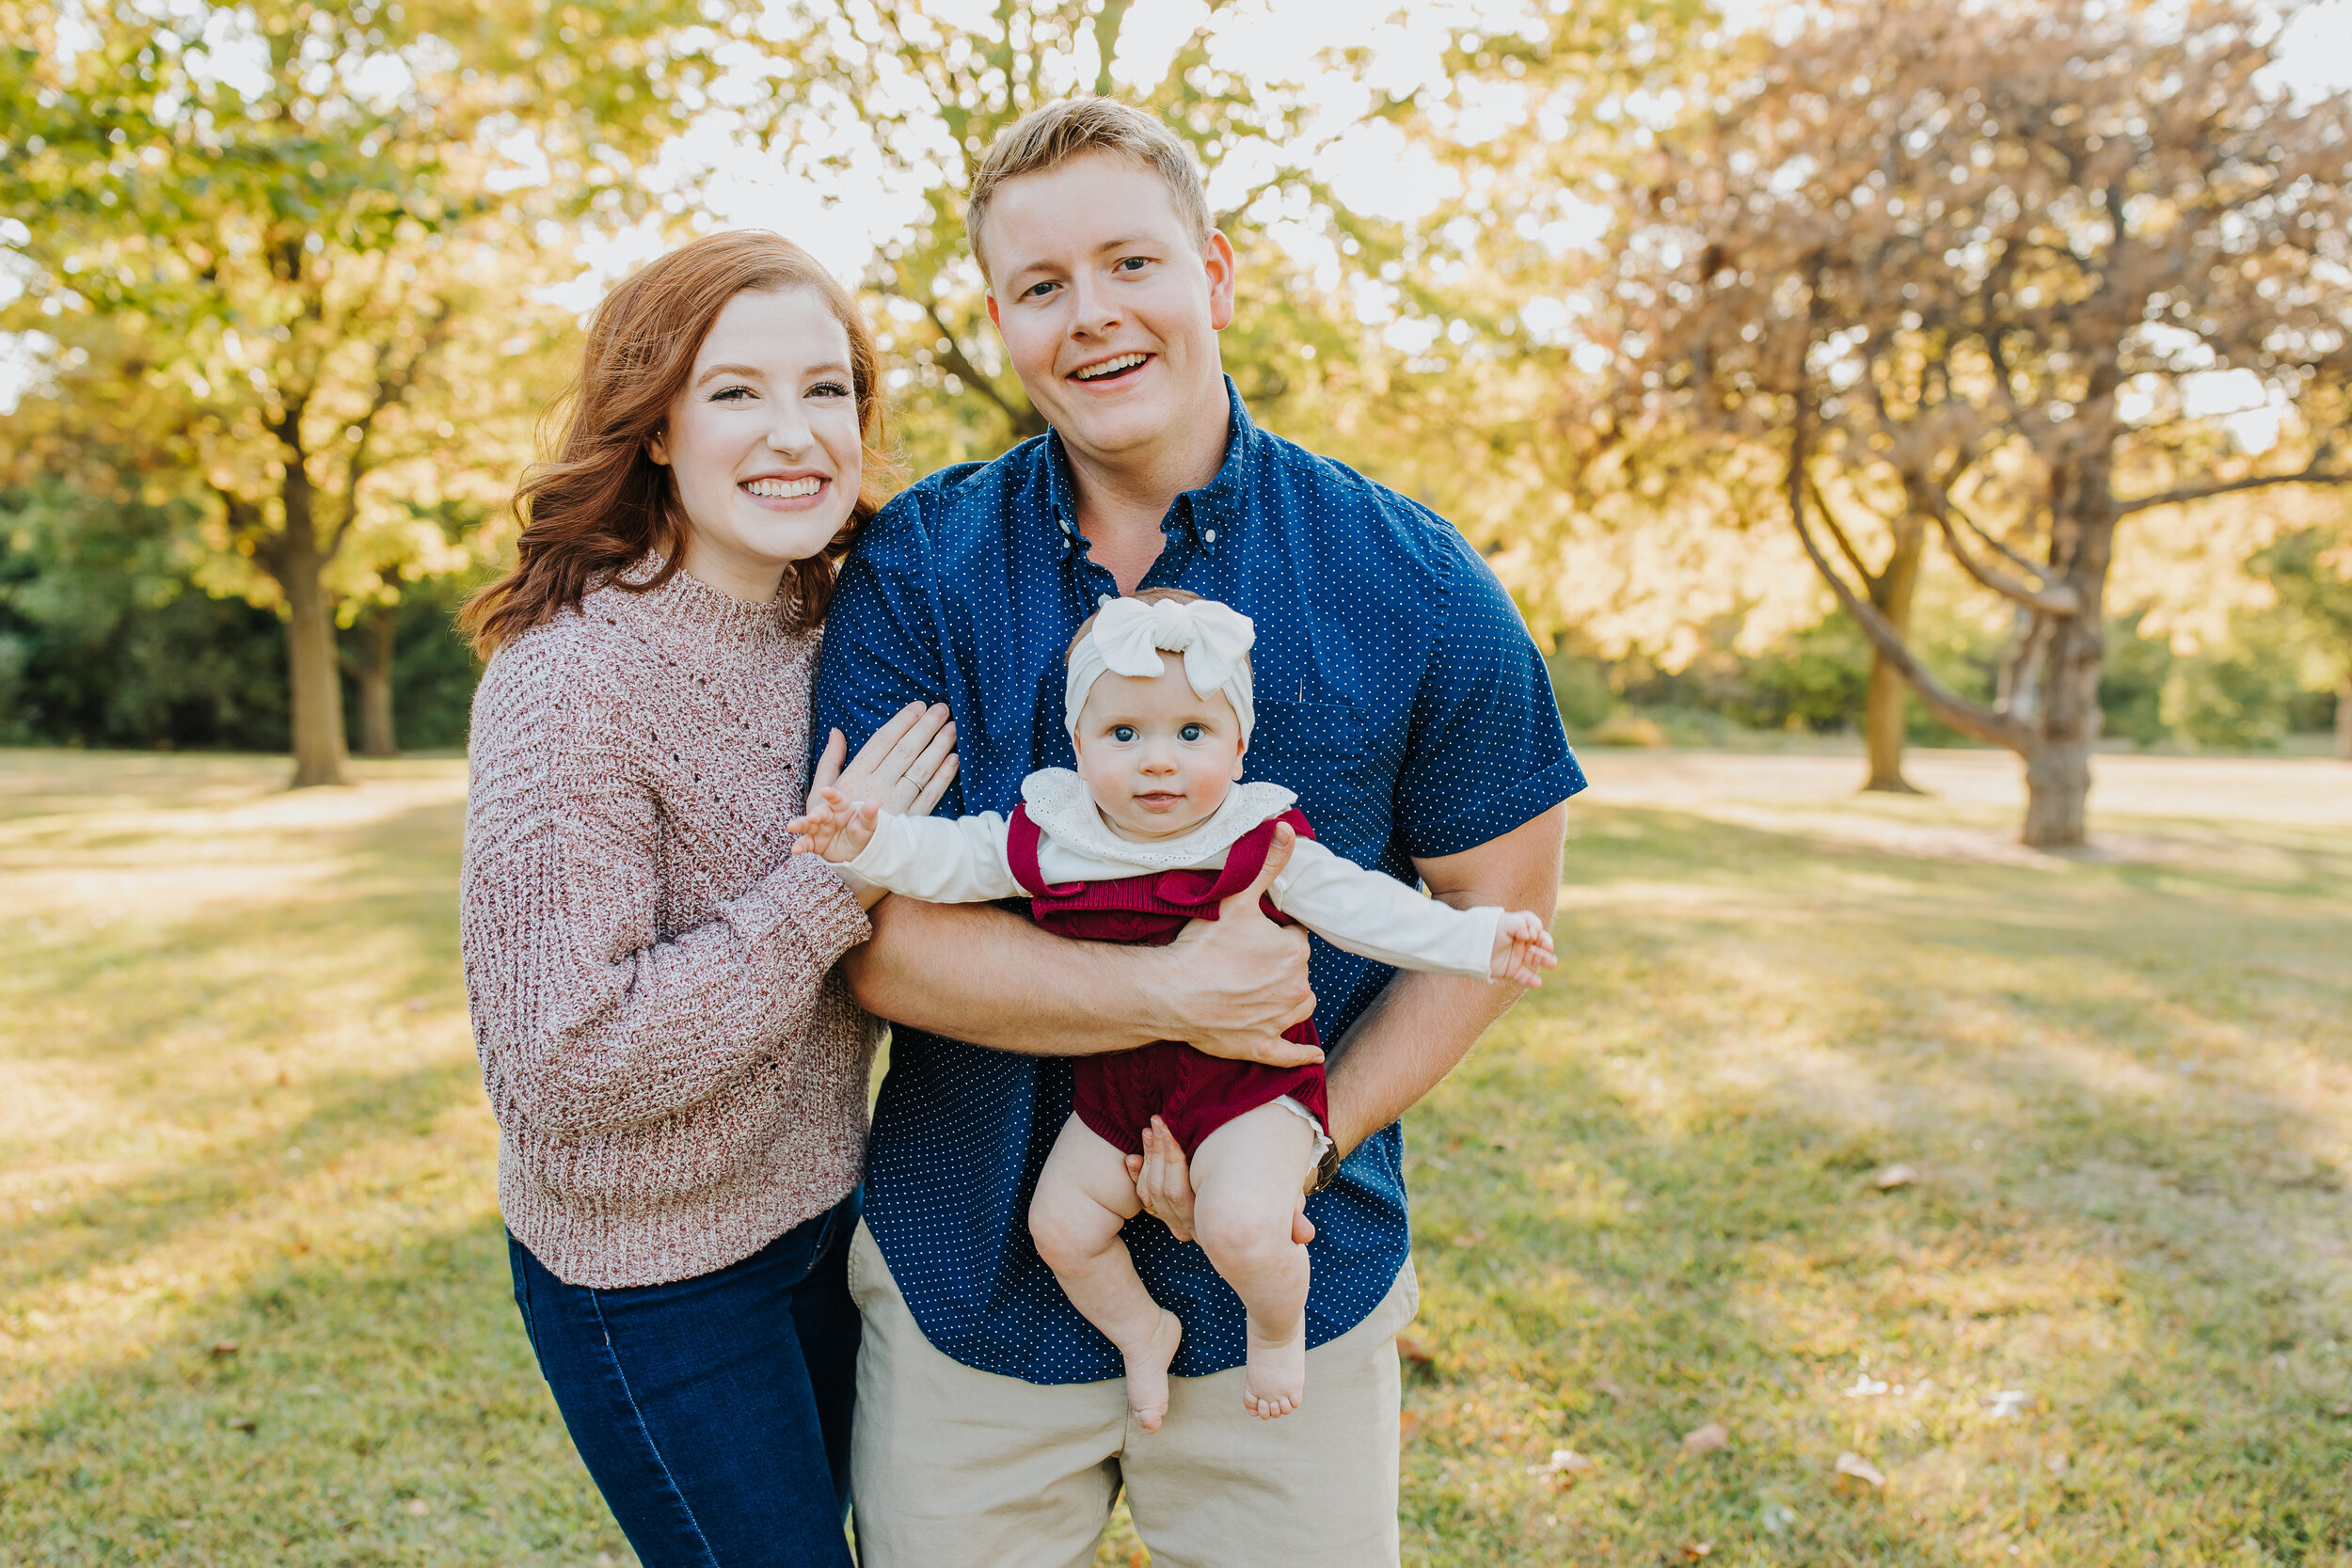 Unger Family Photos 2020 - Nathaniel Jensen Photography - Omaha Nebraska Family Photographer-70.jpg